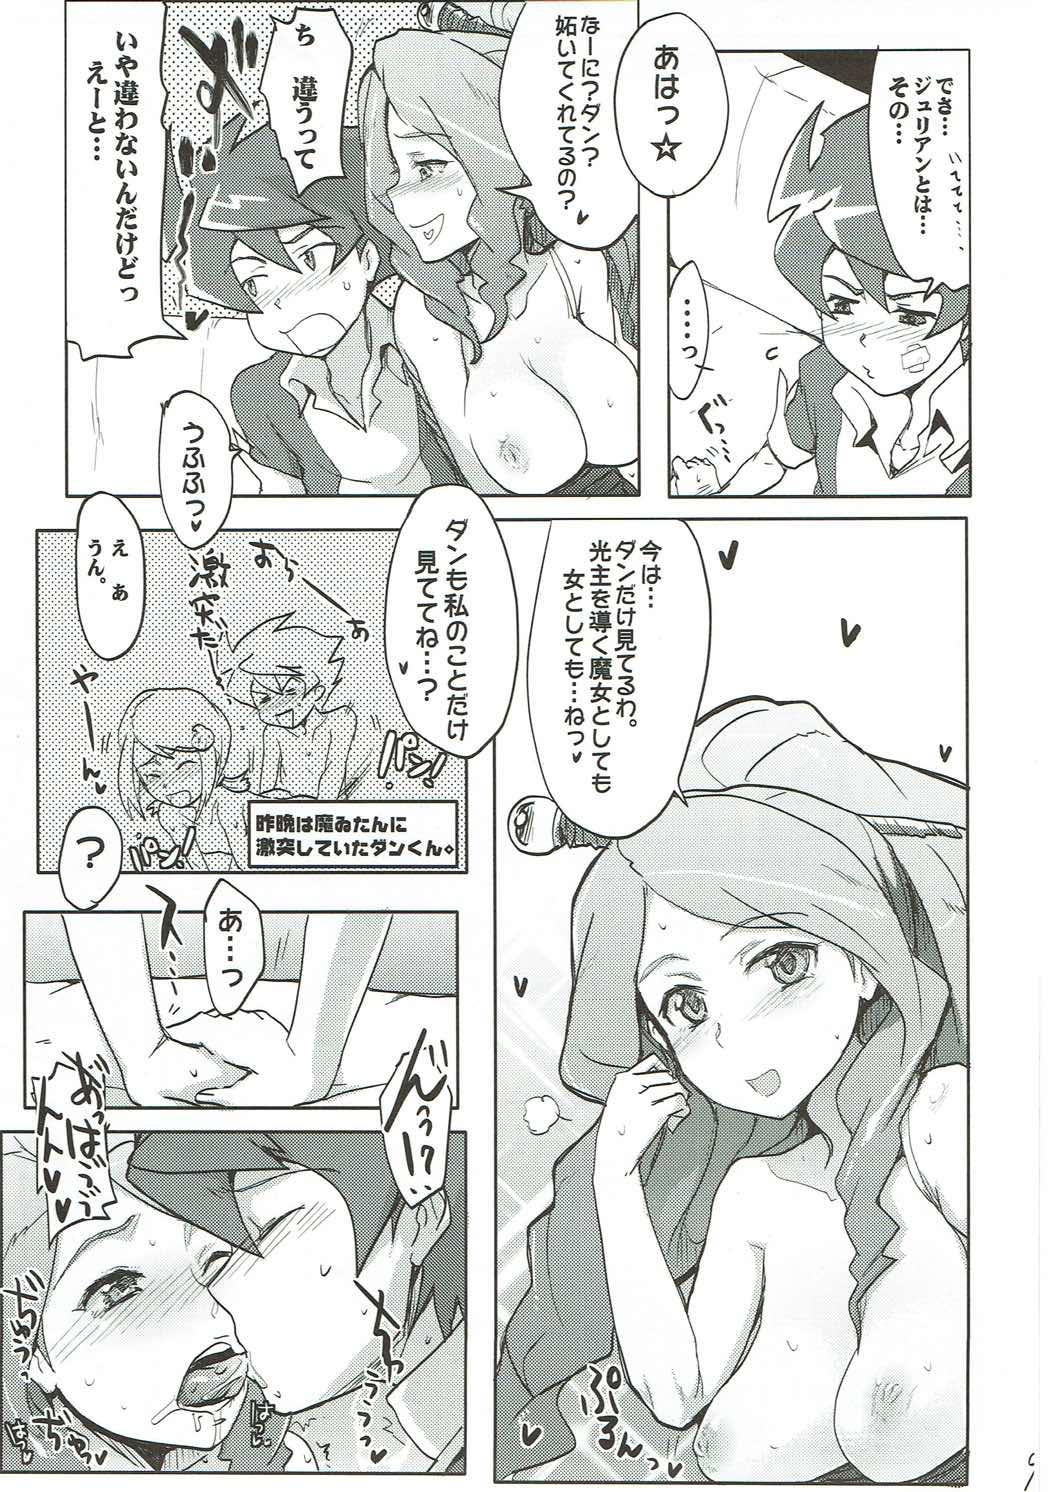 Cruising Seiteki na Nichiyou Anime Bon 2 - Battle spirits White - Page 8